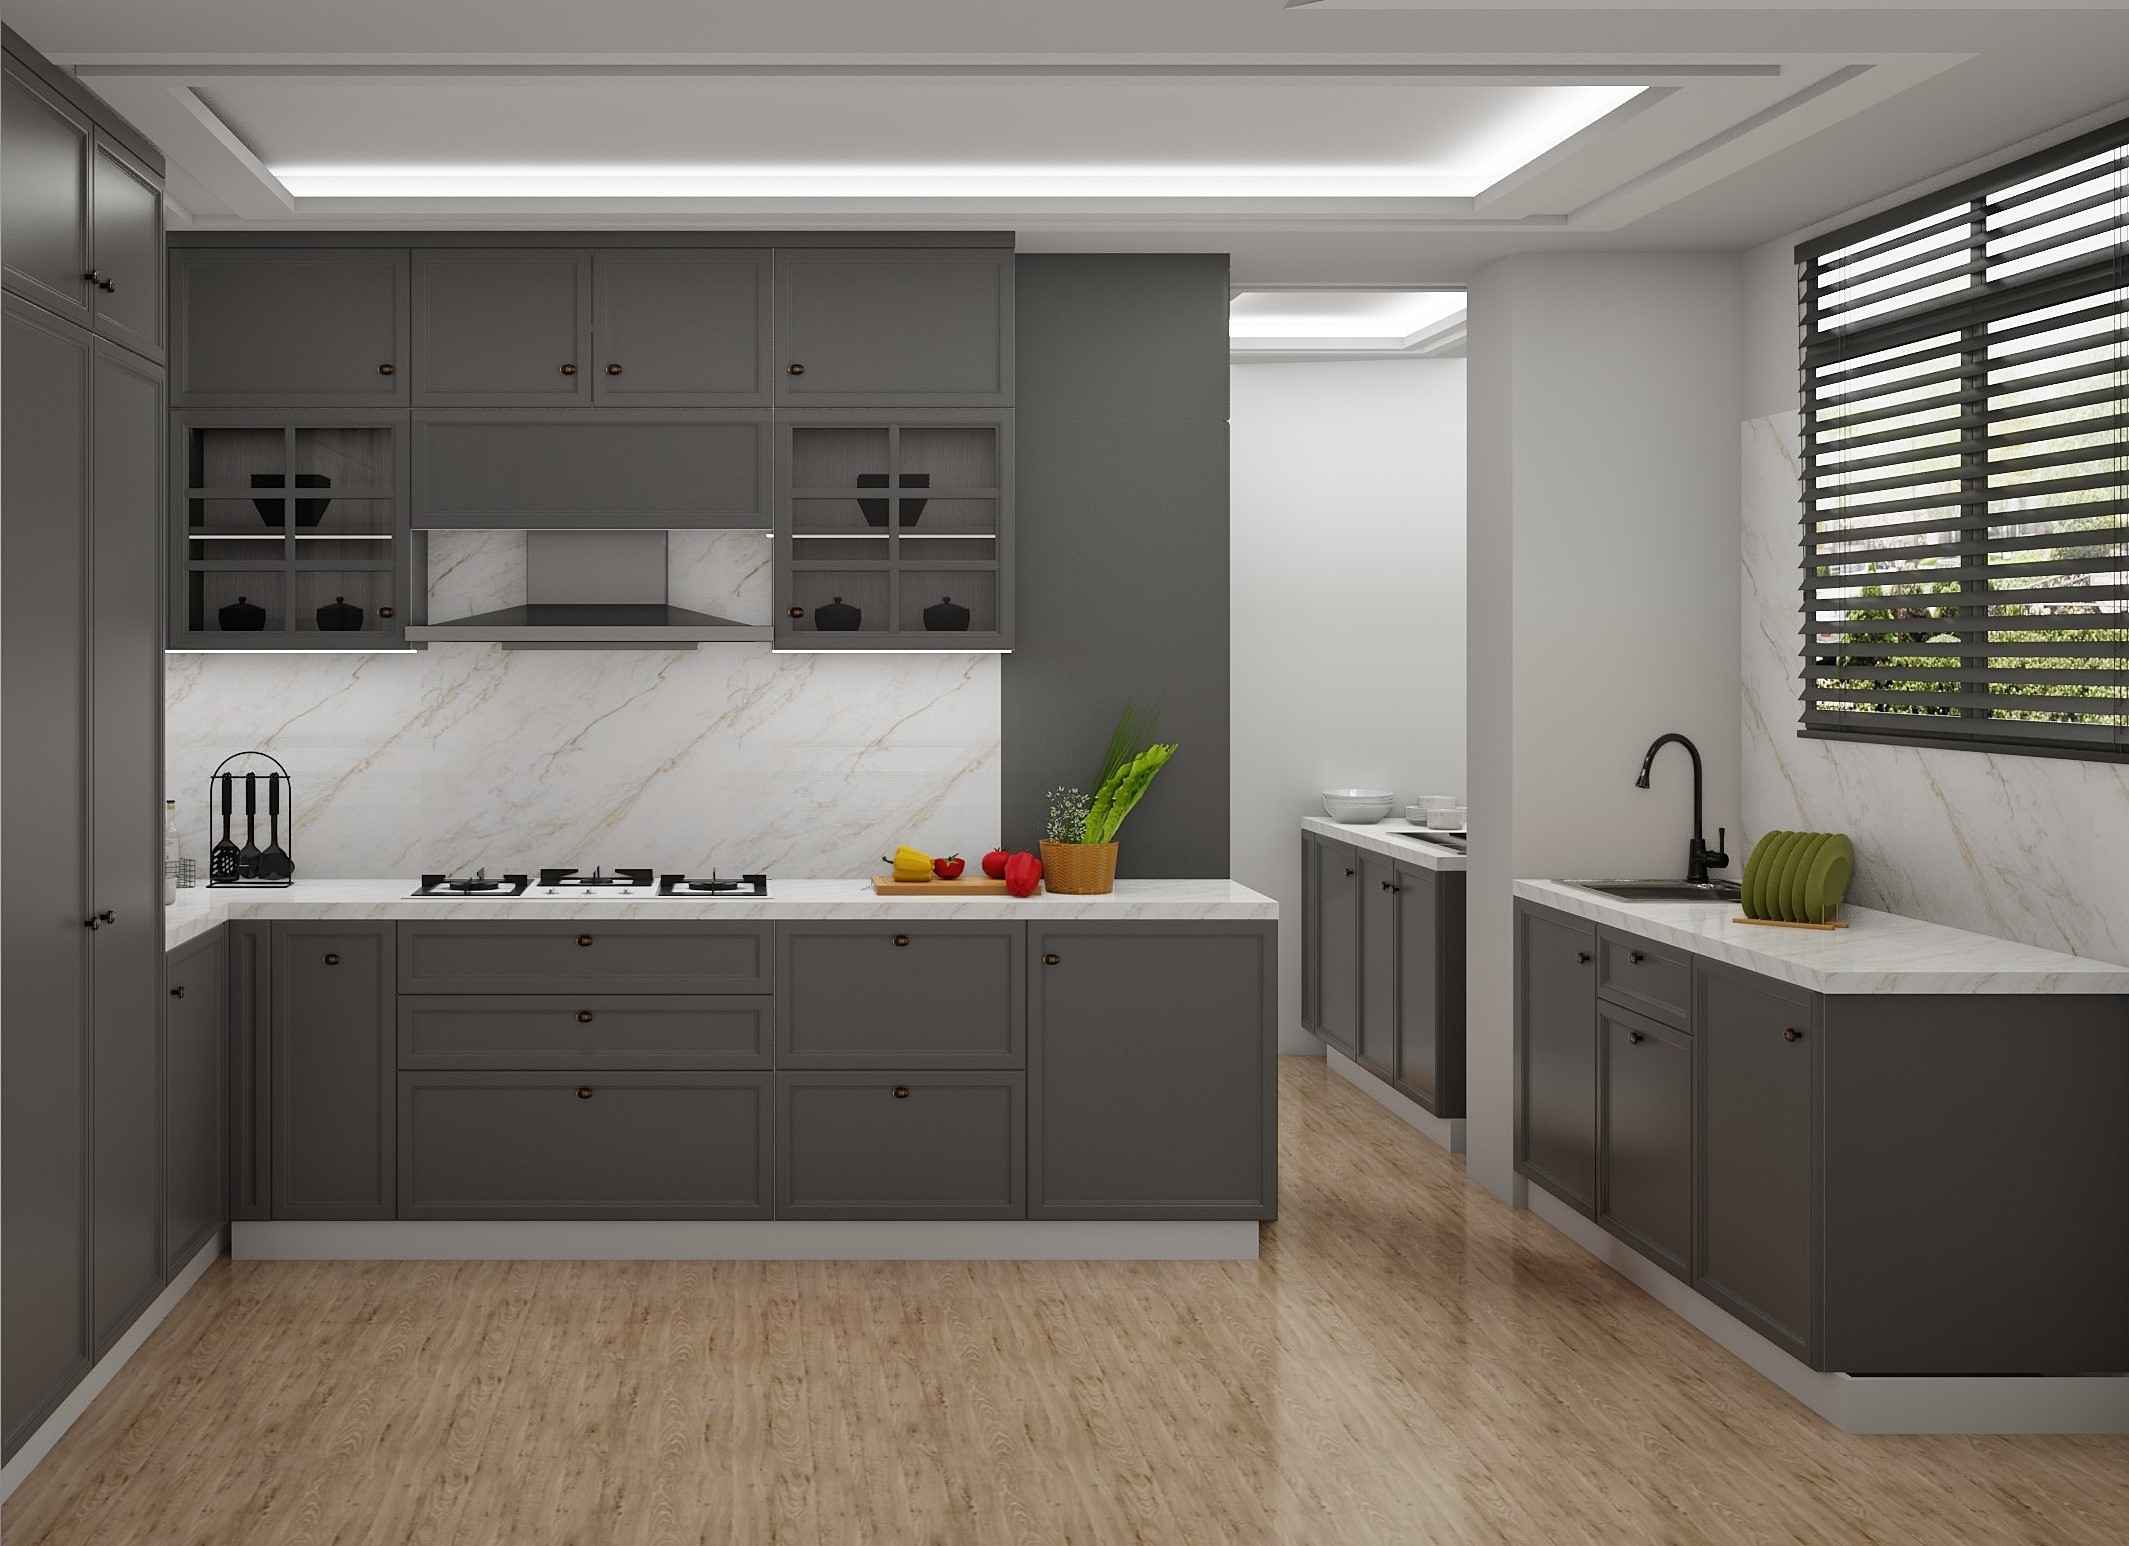 Stylish Parallel Modular Kitchen Design